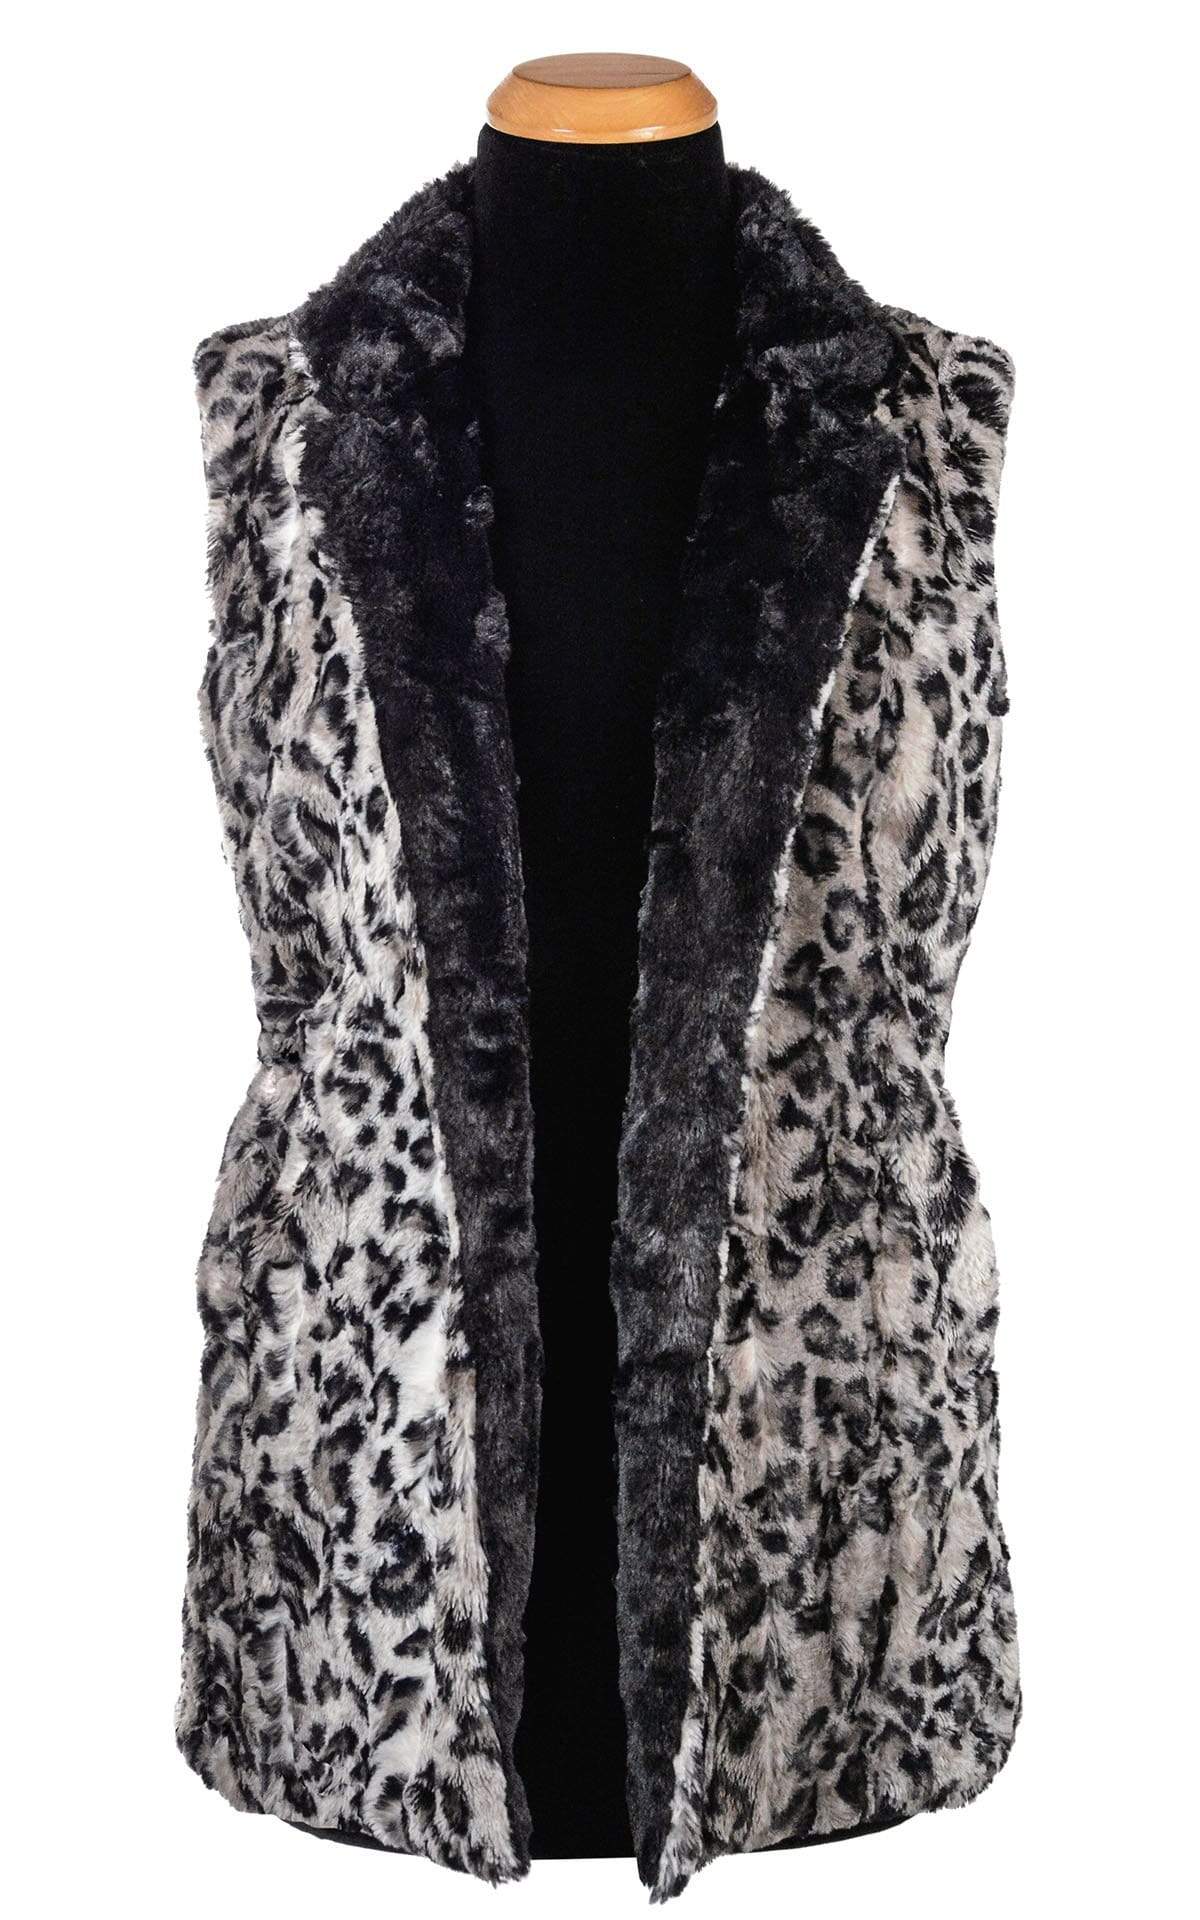 Mandarin Vest Short, Reversible less pockets - Luxury Faux Fur Savannah Cat in Gray with Cuddly Fur in Black